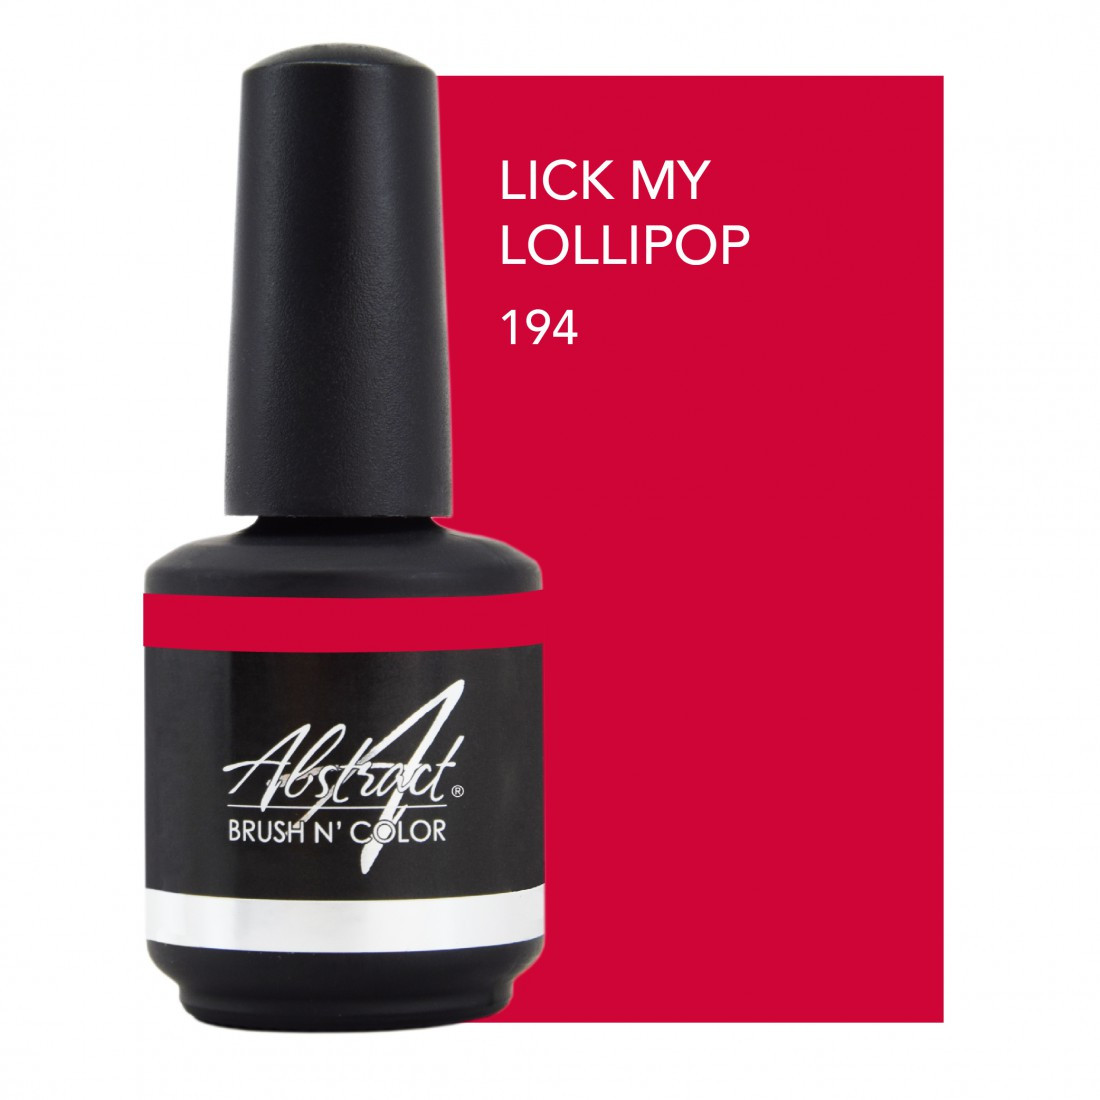 Abstract Lick my lollipop 15 ml